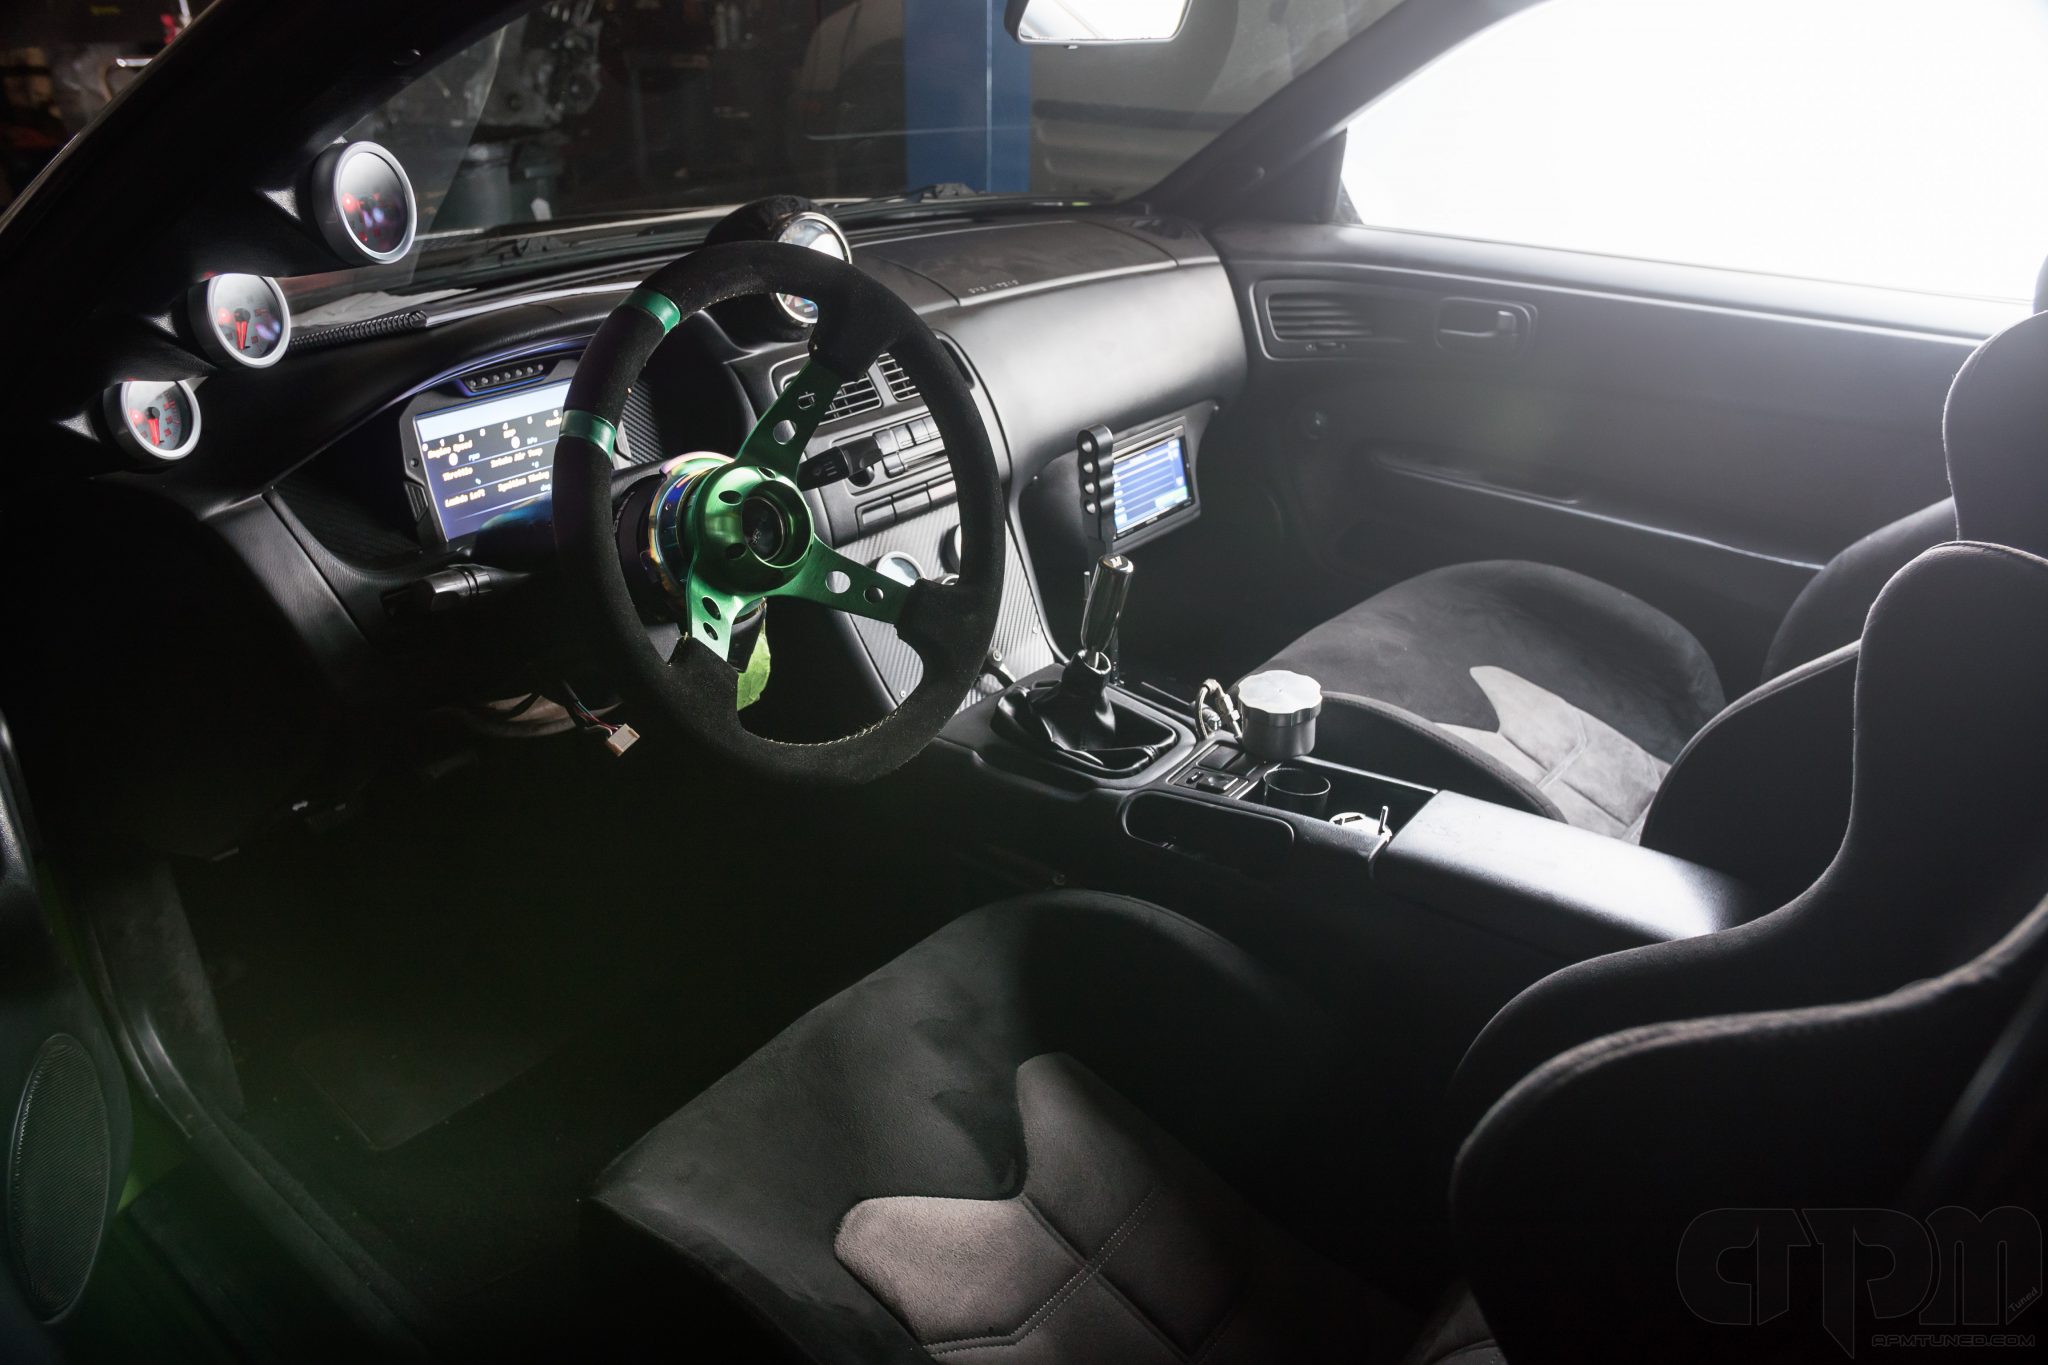 Interior of 240sx drift car with custom installed AEM display and AEM Gauges